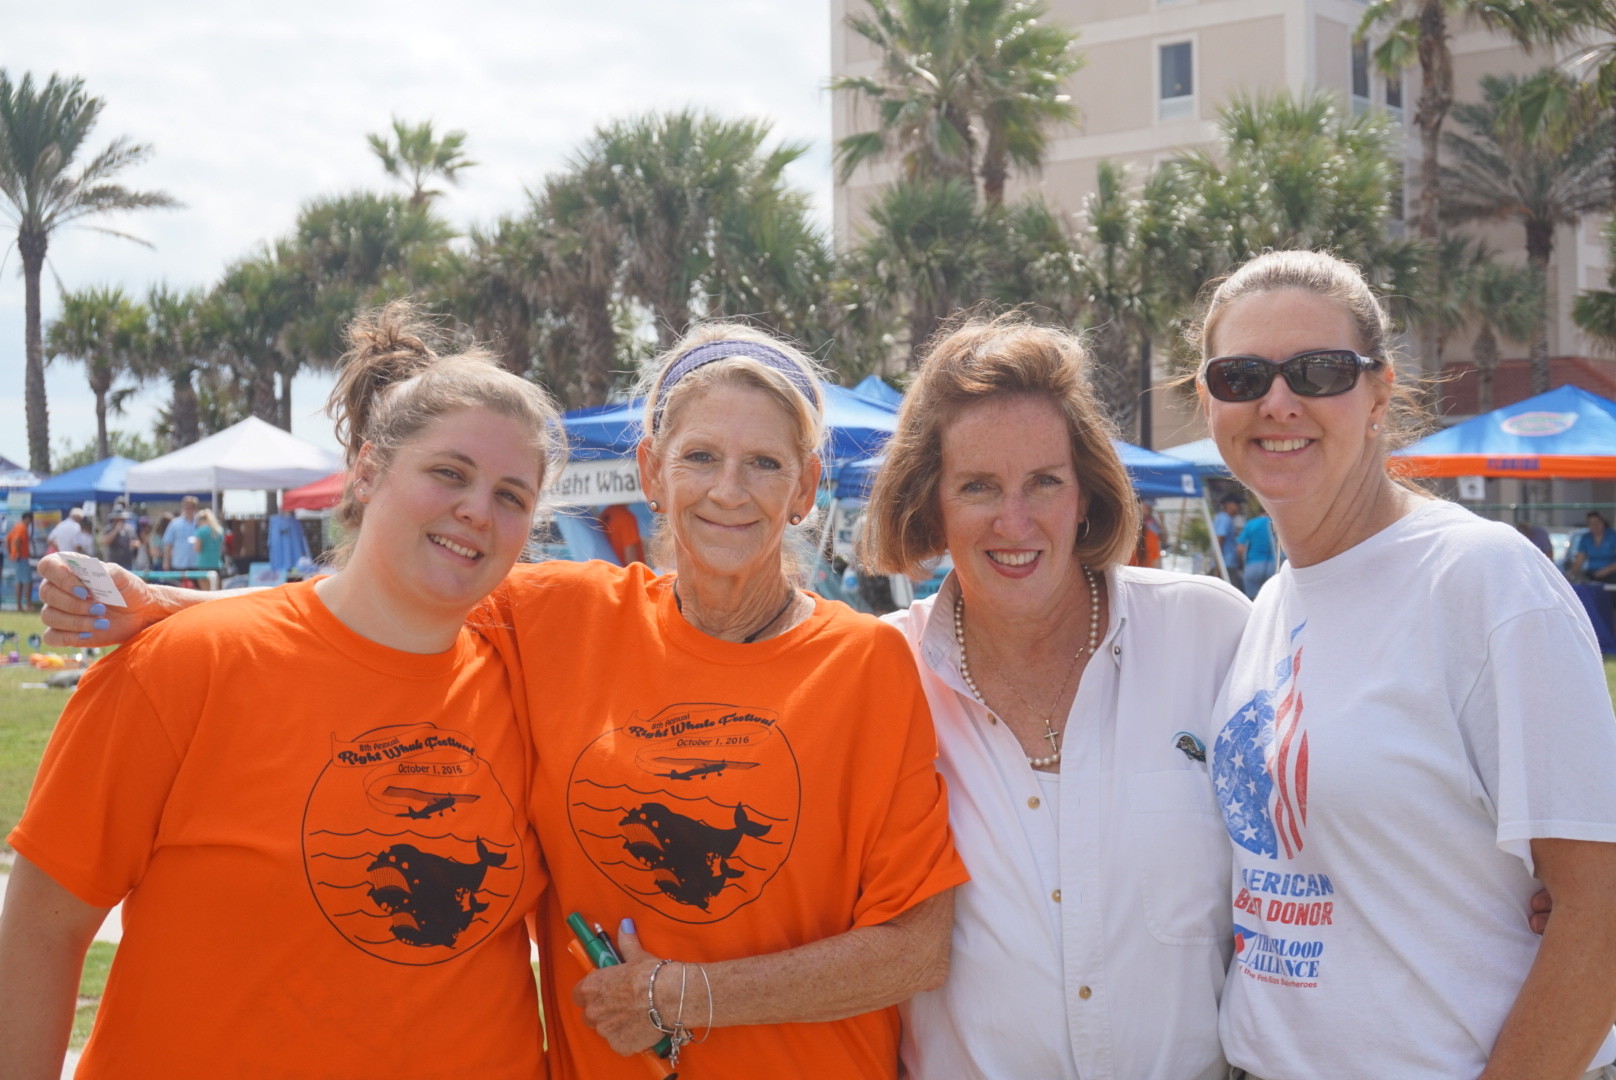 Event volunteers Callen Kelley, Cindy Hewett, Theresa O’Donnell and Sandie Brunson